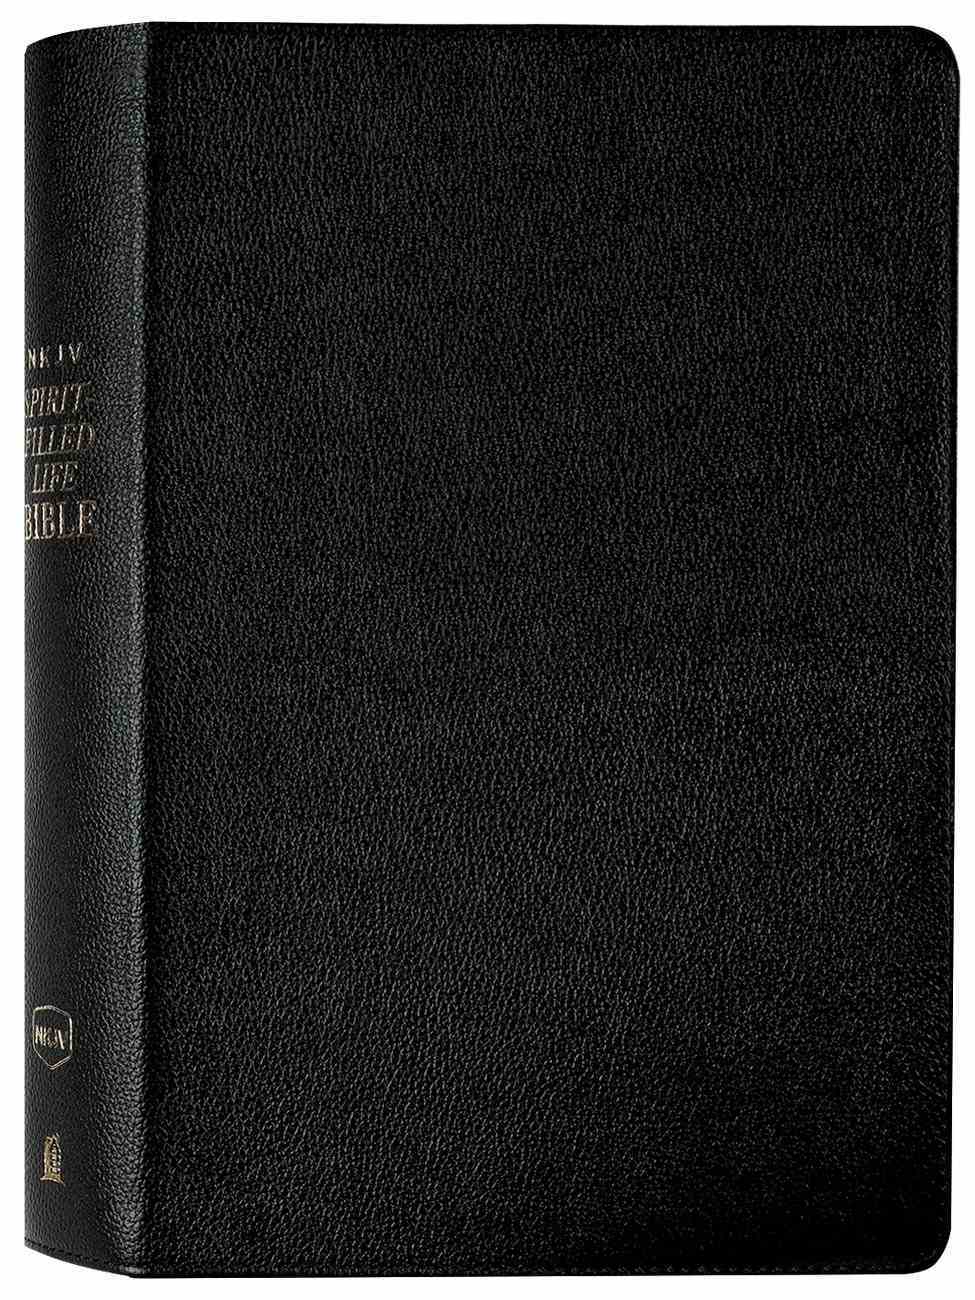 NKJV Spirit-Filled Life Bible Black (Red Letter Edition) (Third Edition) Genuine Leather